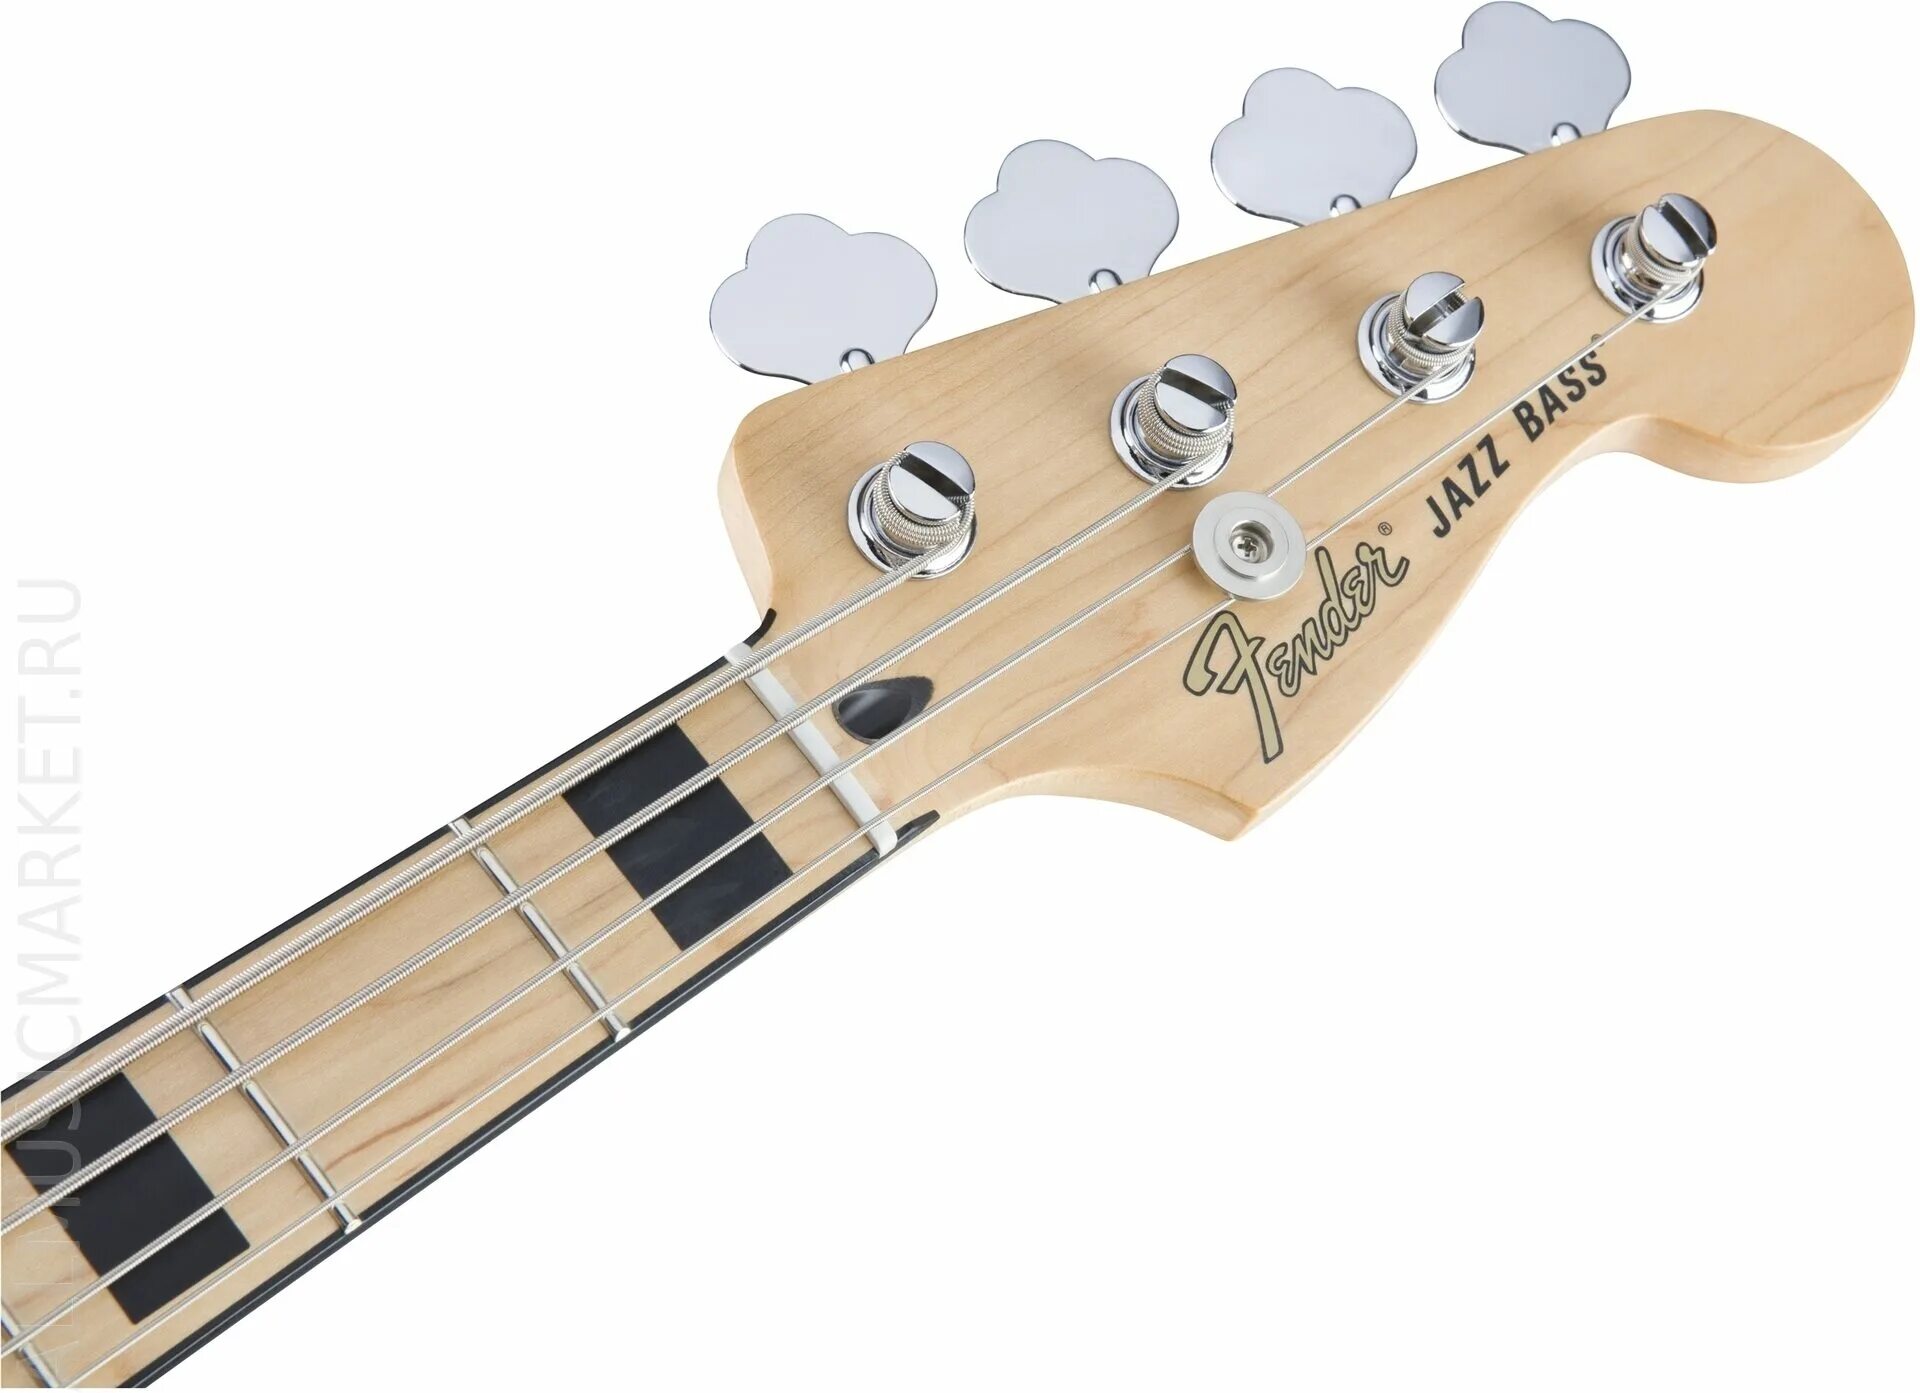 Fender Deluxe Active Jazz Bass. Fender Deluxe бас гитара. Deluxe Active Jazz Bass. Бас гитара Фендер джаз.